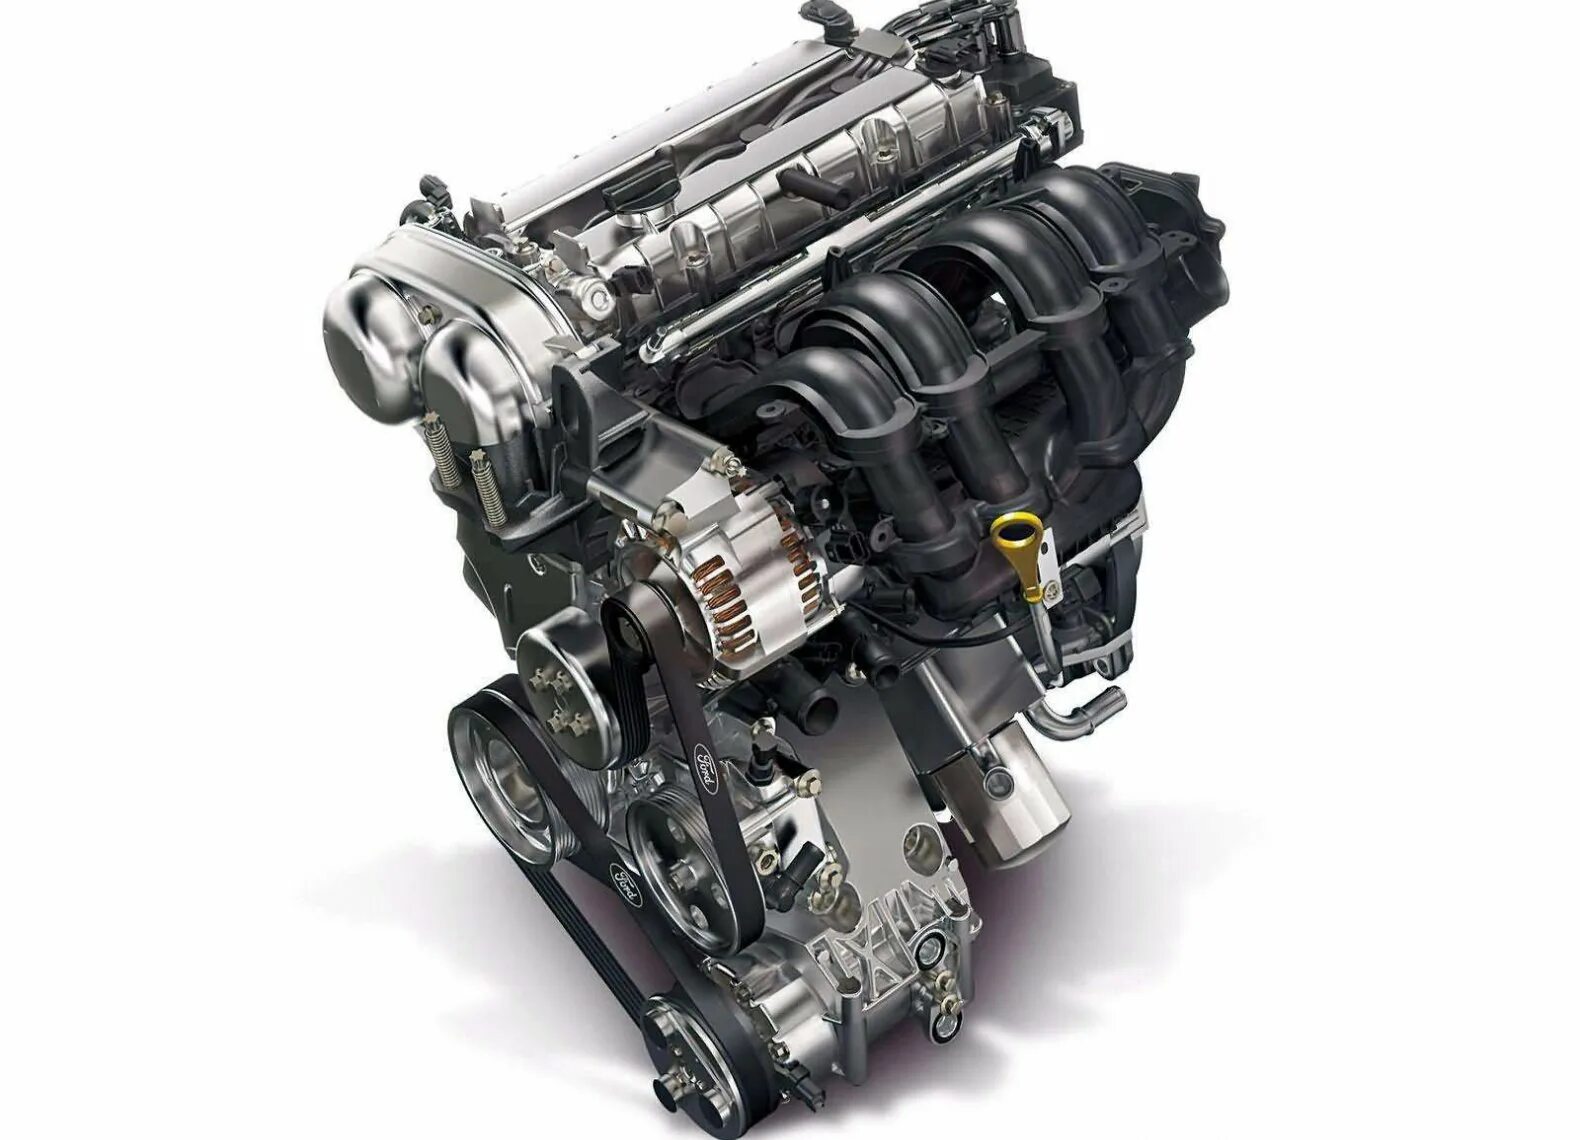 Ford Focus 2 1.4 двигатель. Мотор Форд фокус 1.4. Двигатель Форд фокус 2 1.4. Двигатель Форд фокус 2 1.8.